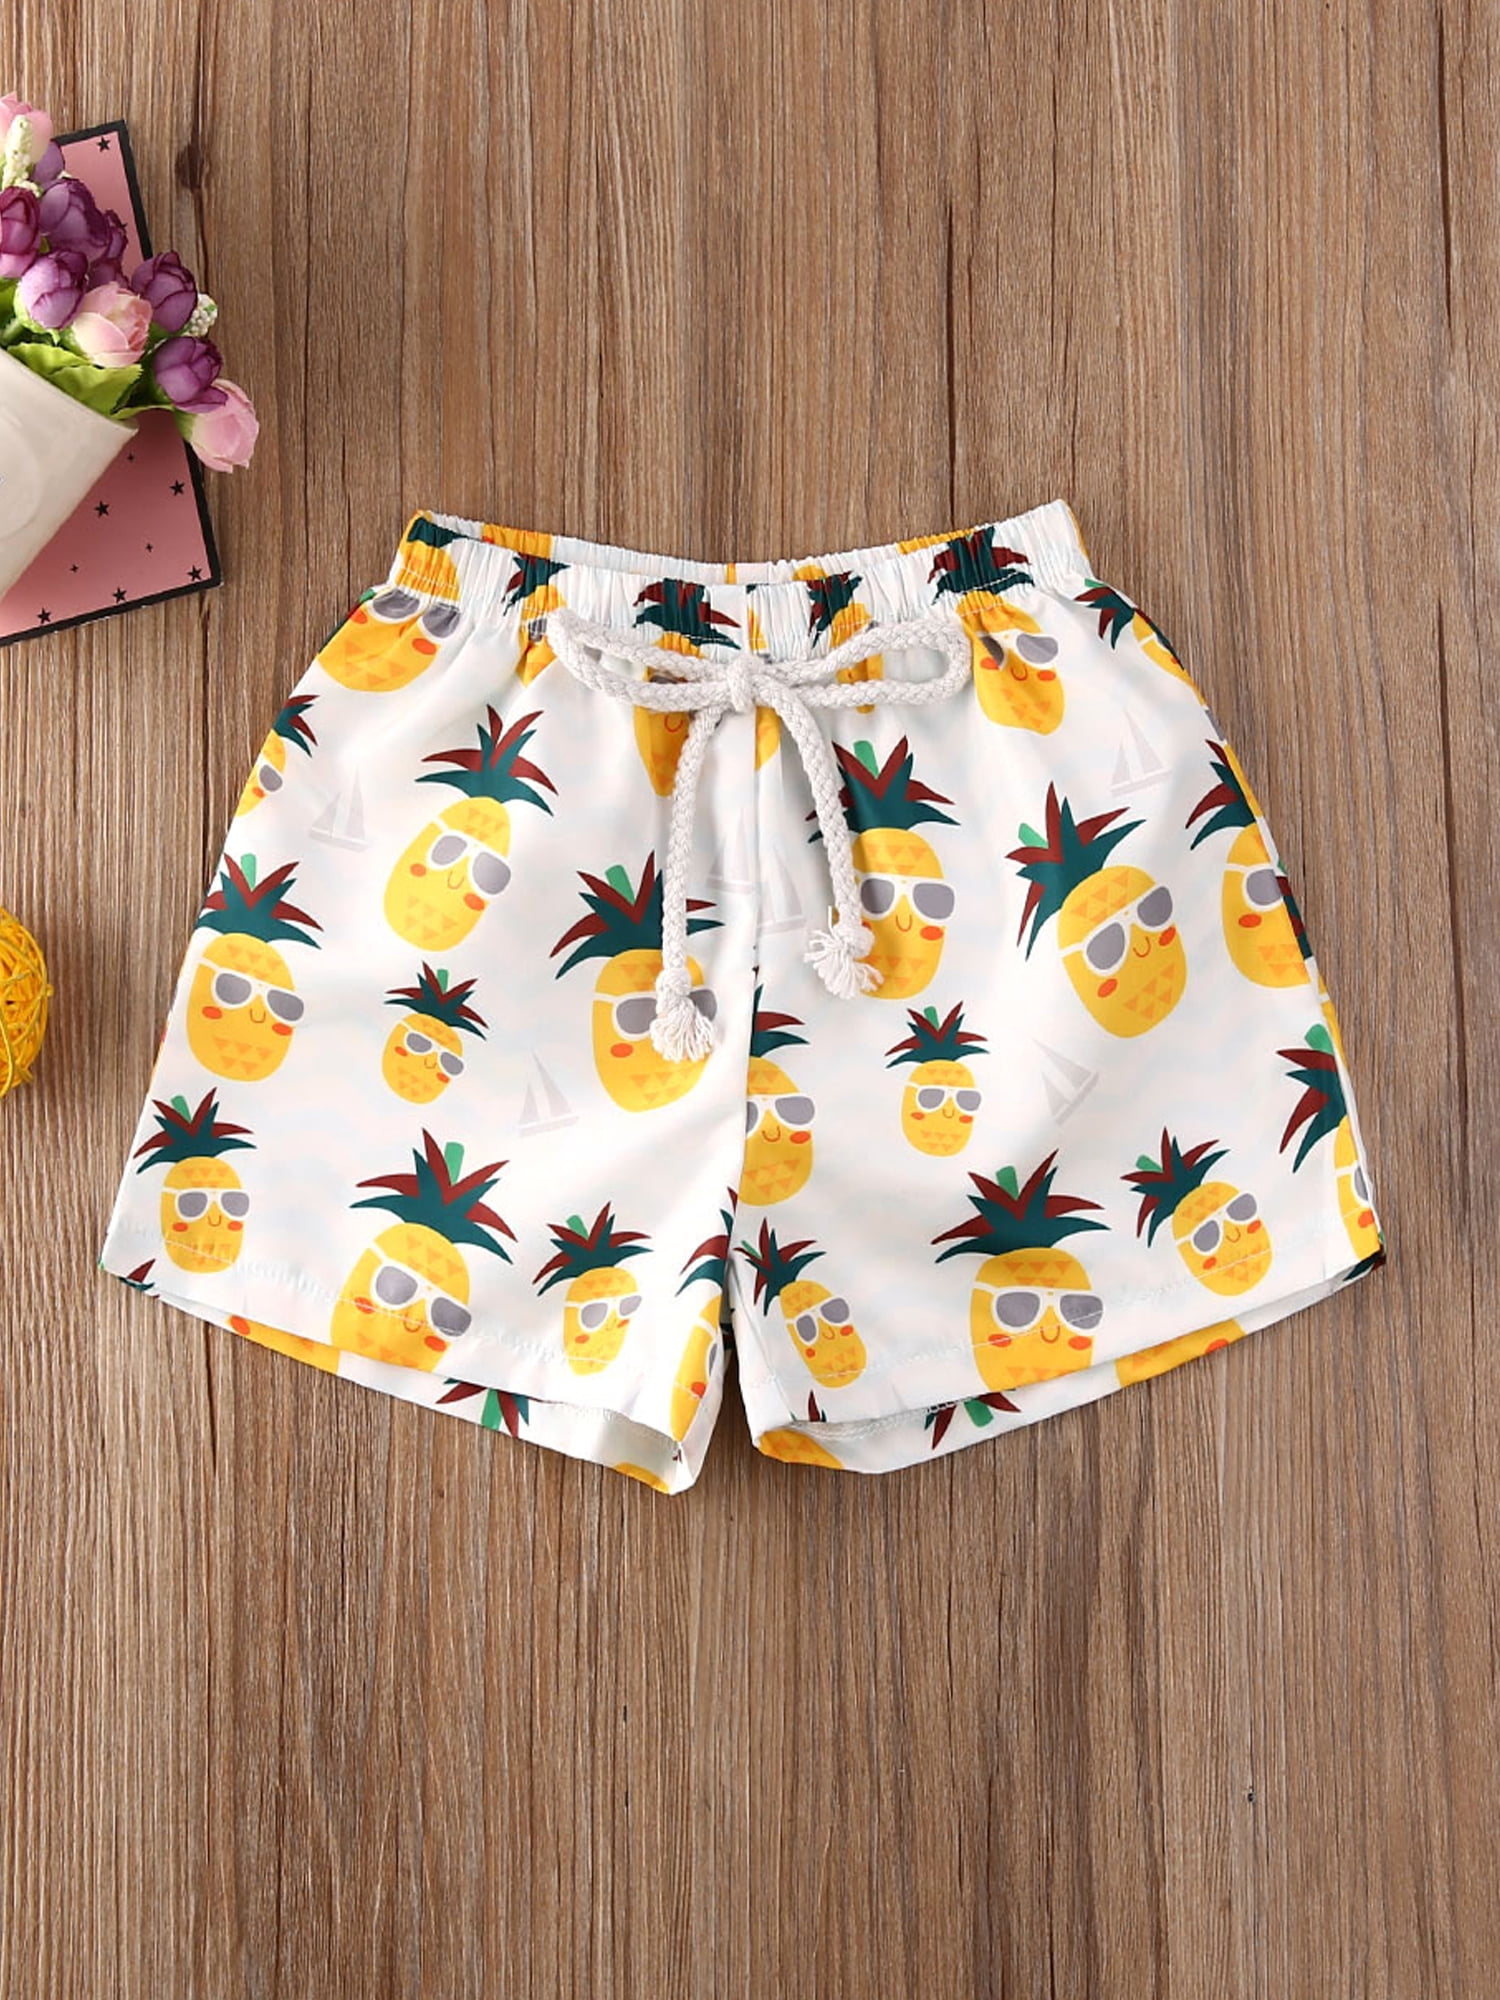 Ampopt Baby Boy Girl Hawaiian Beach Shorts Swim Trunks Pineapple Fruit Leaf Cartoon Print Casual Broad Shorts Swimwear 0-5T 